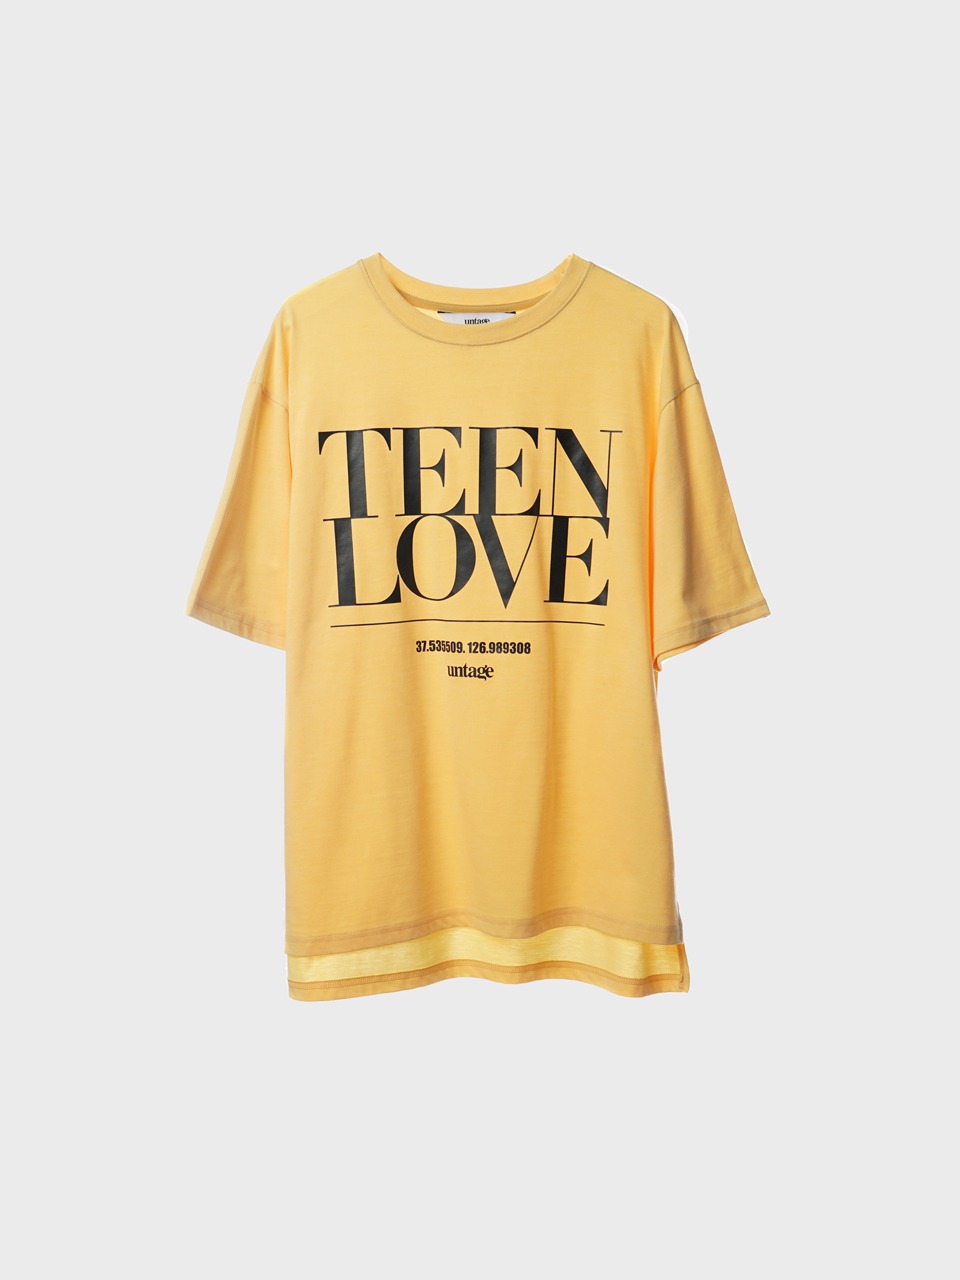 Modern Teen Love T-Shirts (yellow)